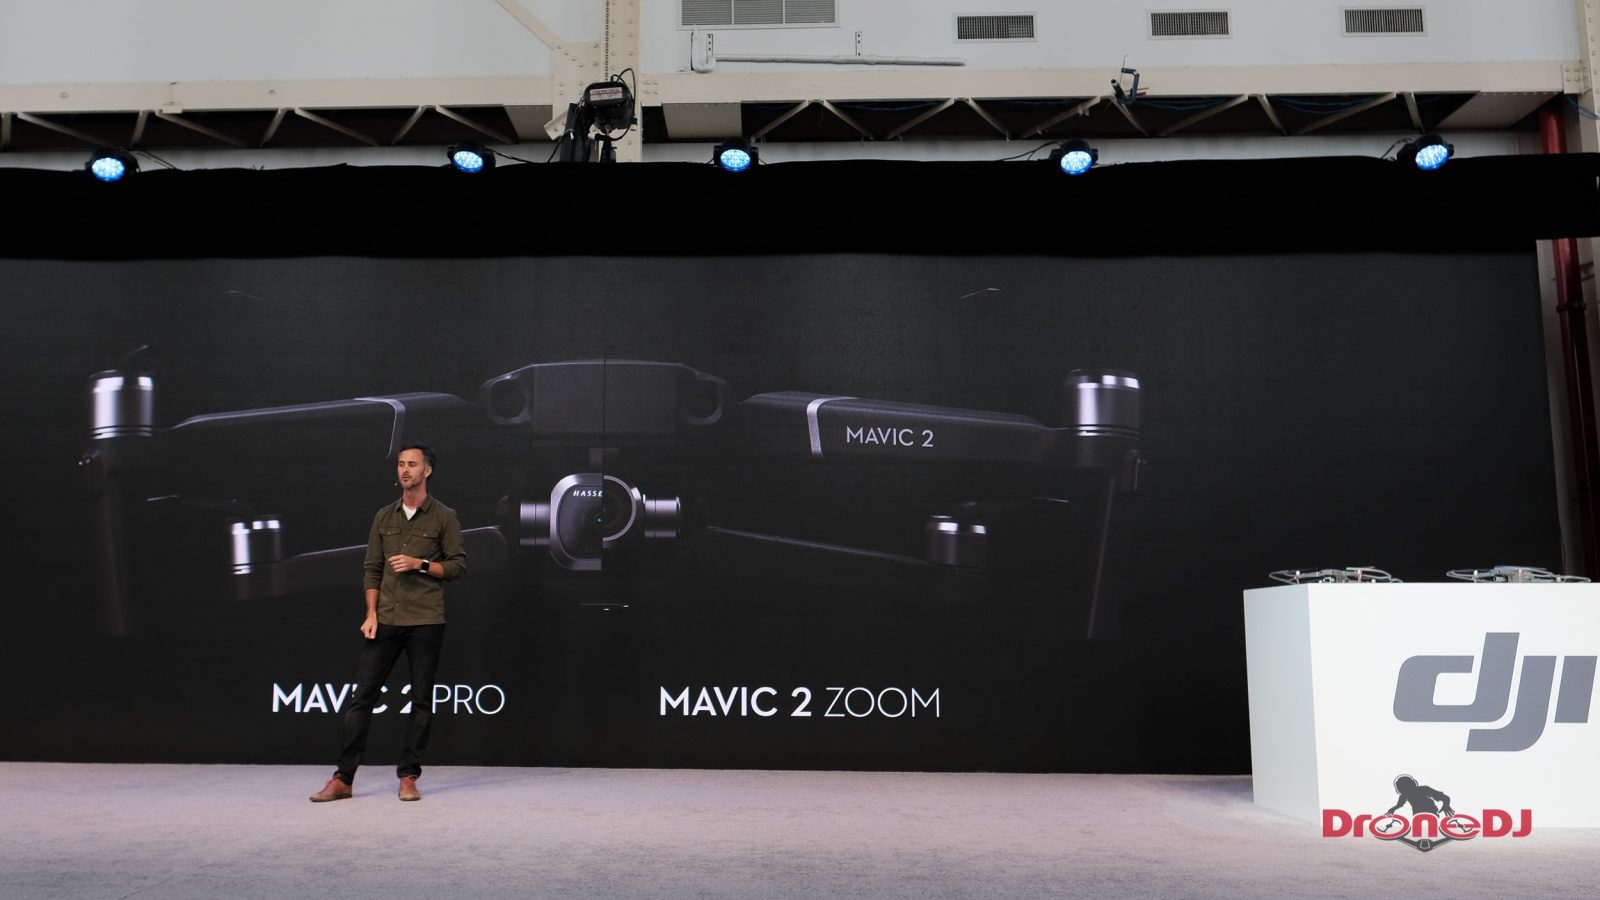 DJI introduces two new drones: the Mavic 2 Pro and Mavic 2 Zoom